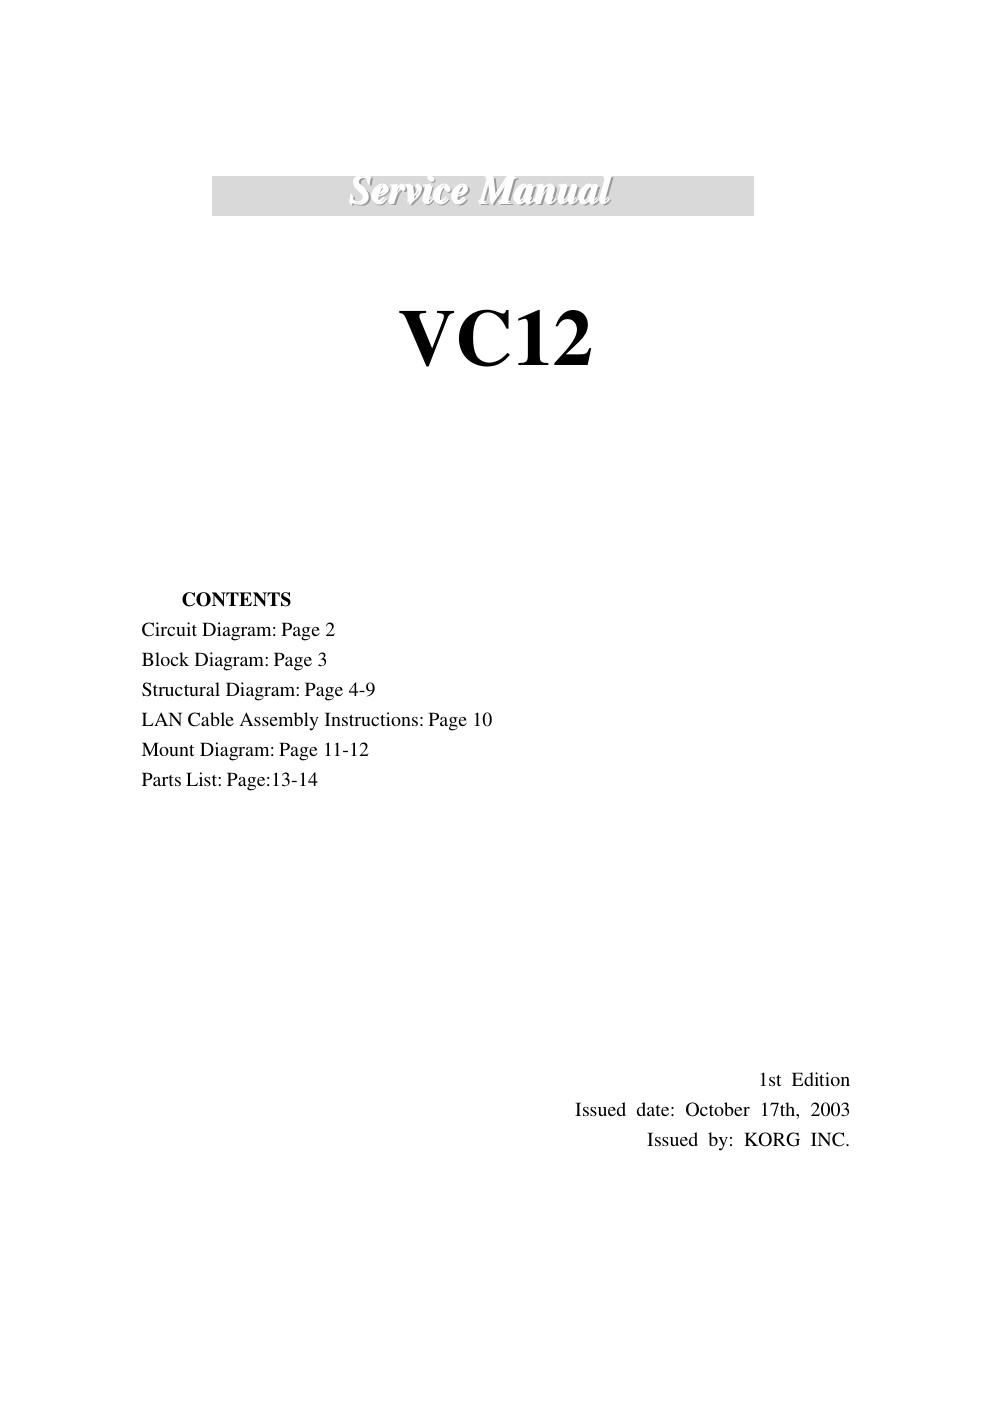 vox vc12 service manual